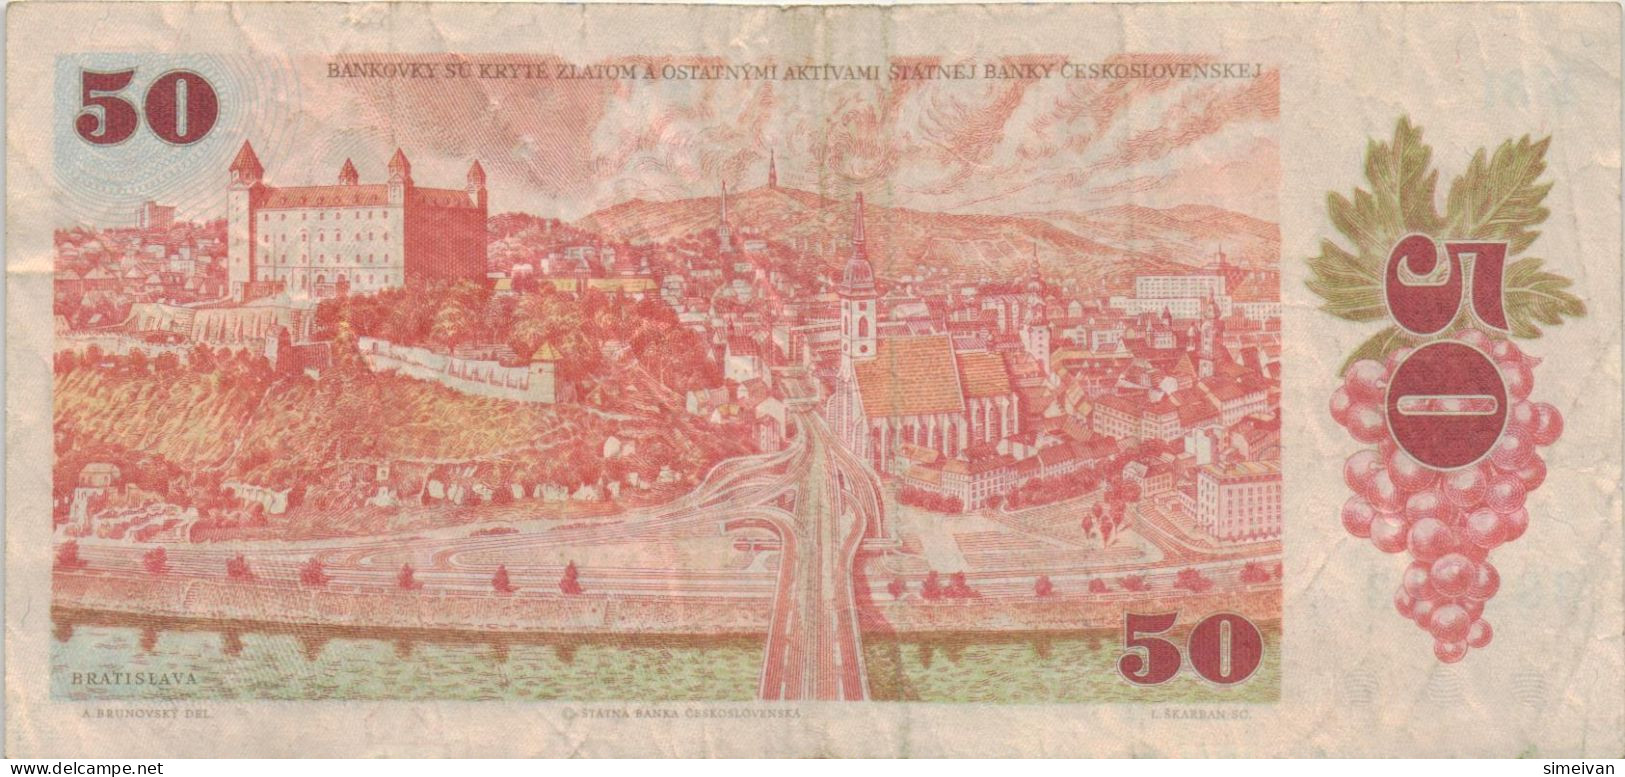 Czechoslovakia 50 Korun 1987 P-96a Banknote Europe Currency Tchécoslovaquie Tschechoslowakei #5258 - Tschechoslowakei